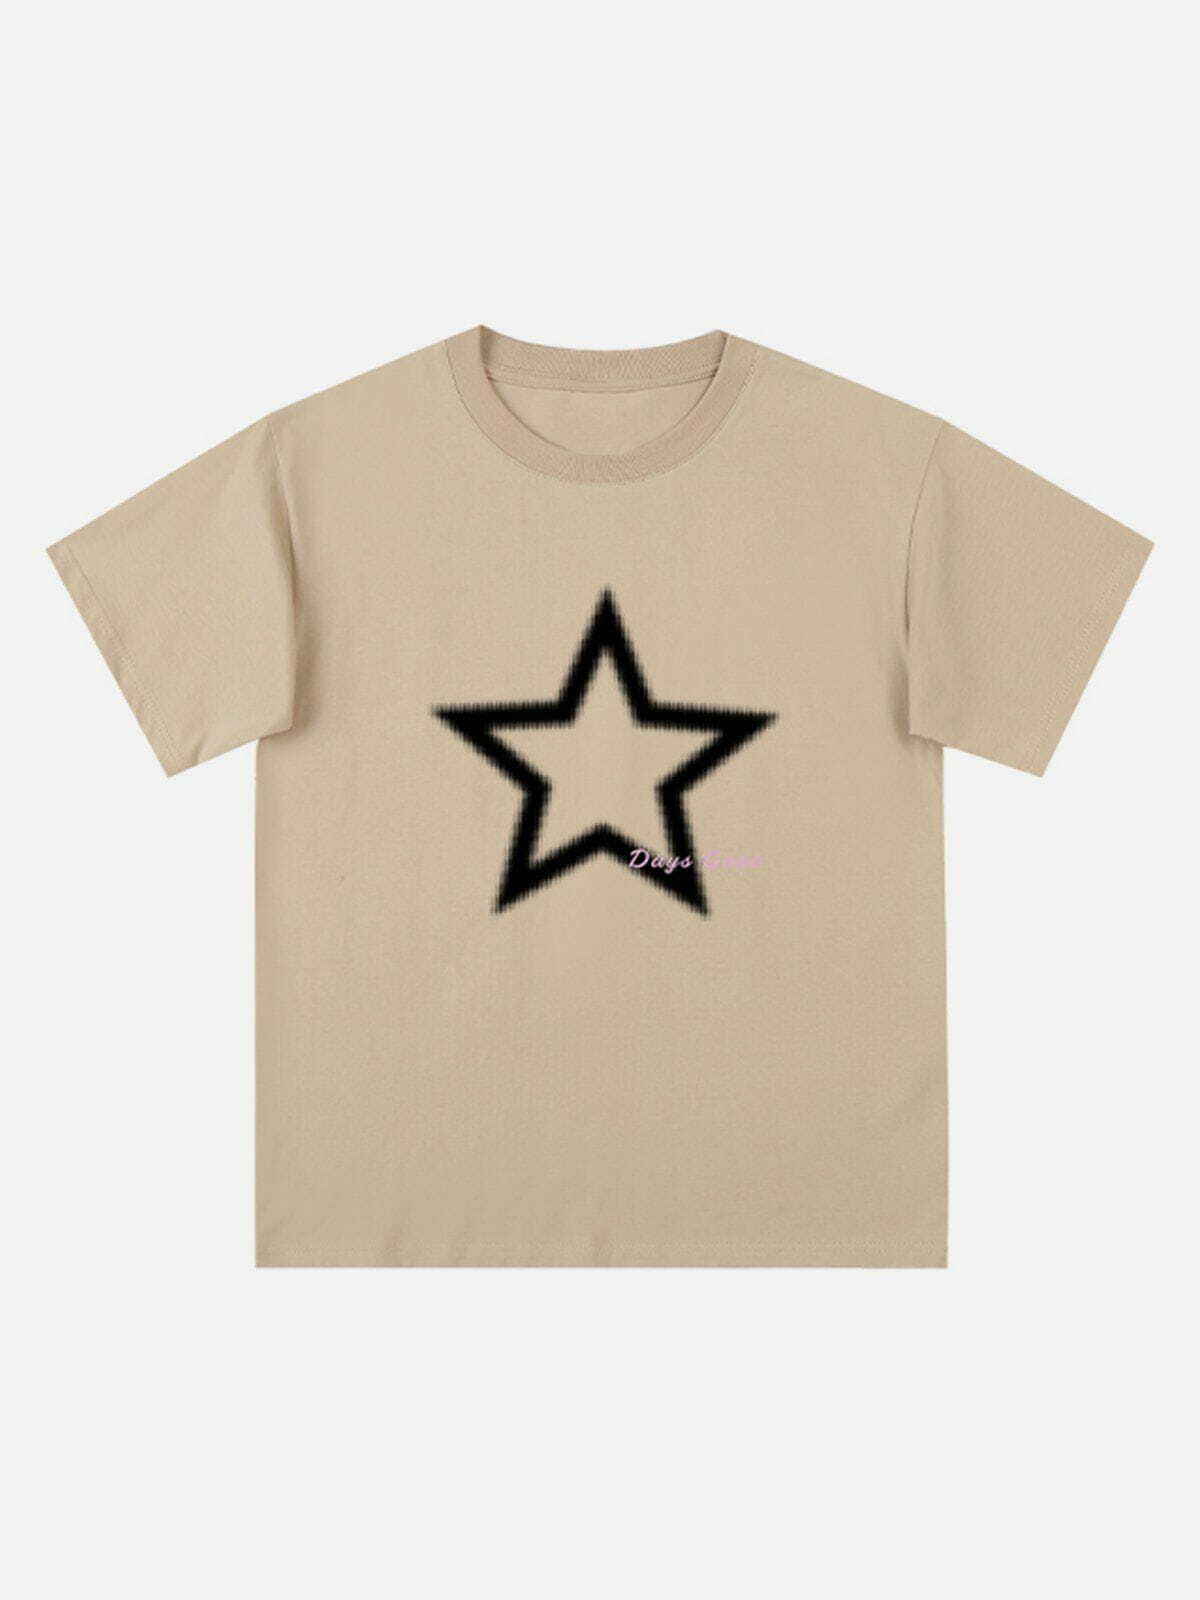 playful star print tee edgy  retro shirt for youthful streetwear 4582